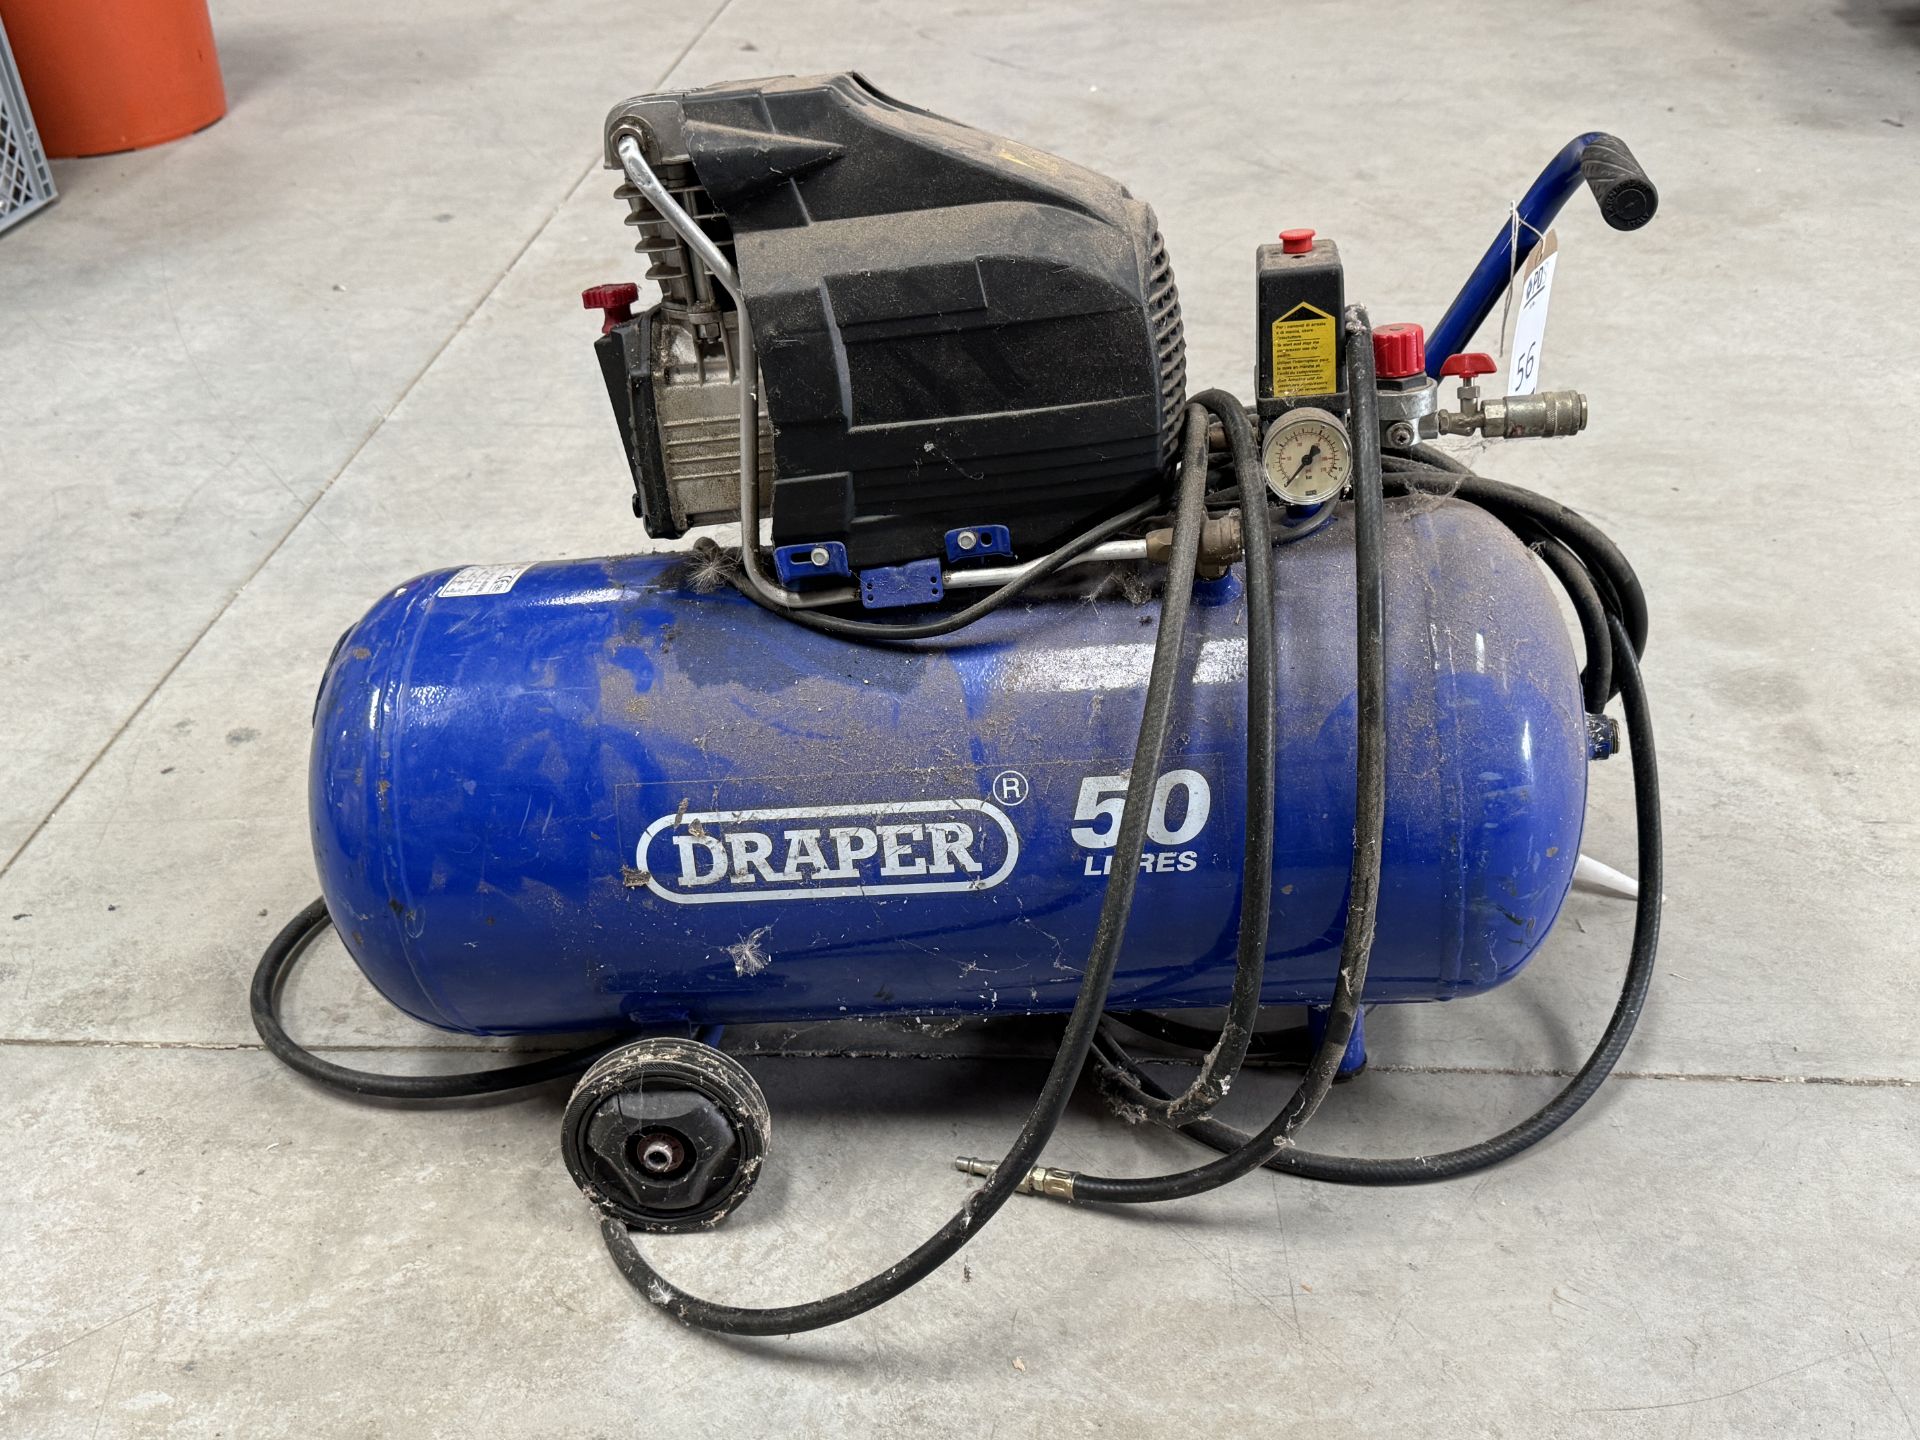 Draper 50 Litre Portable Receiver Mounted Compressor, Serial No. B090075958 (Location: Brentwood.